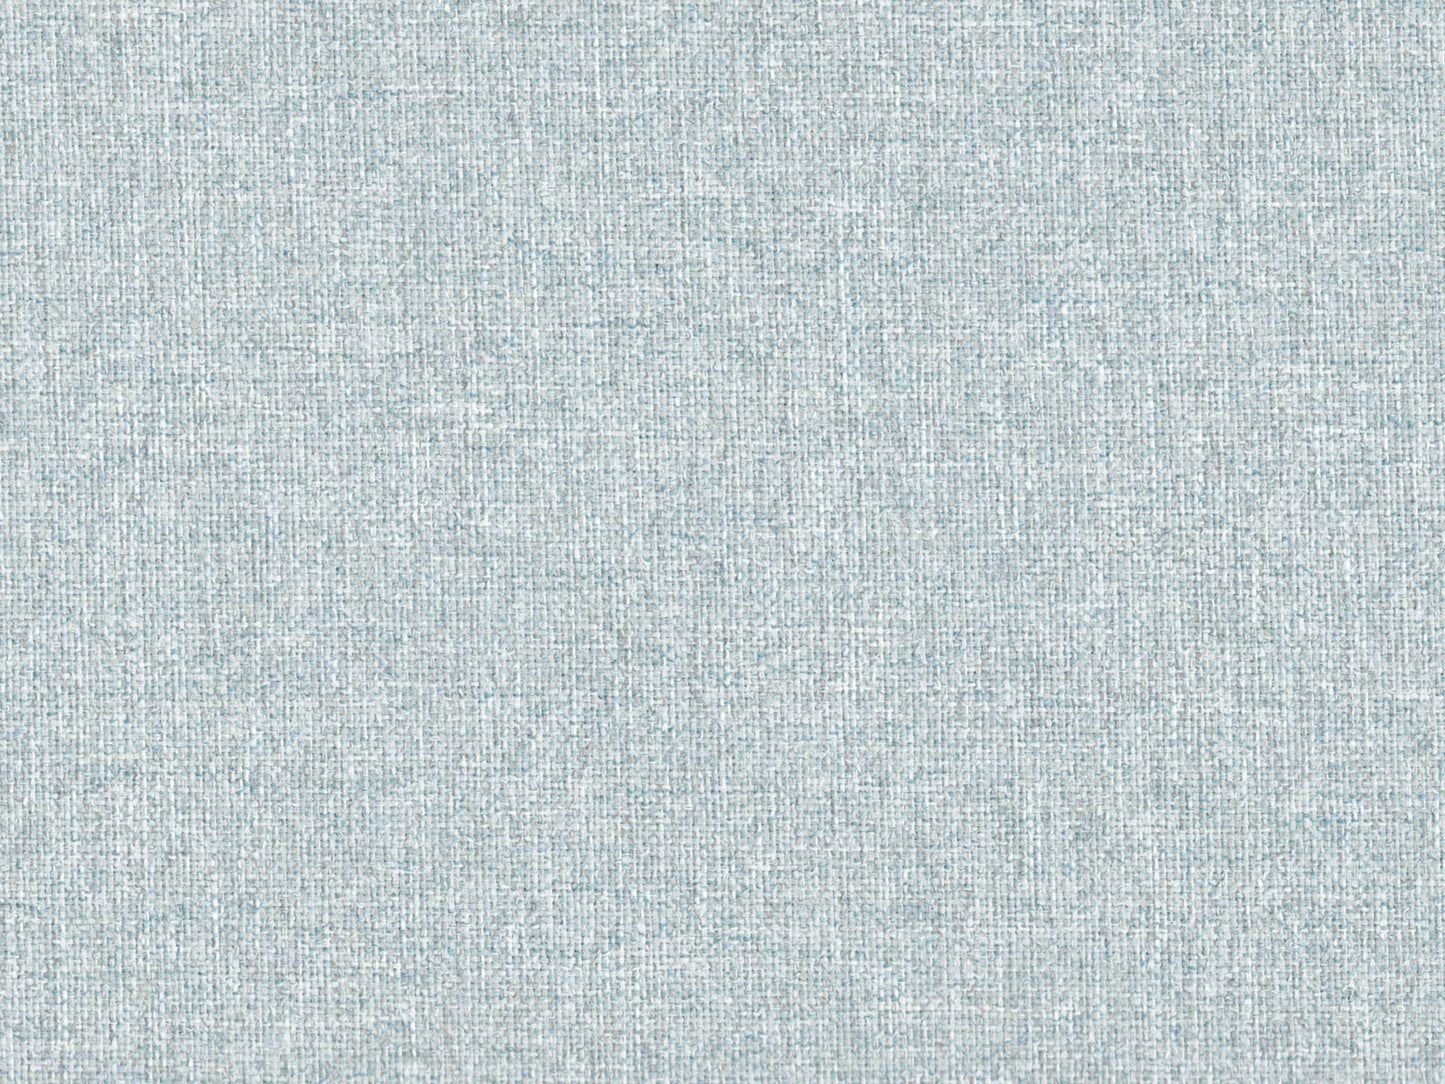 Catania Fabric Samples - Rydan Interiors